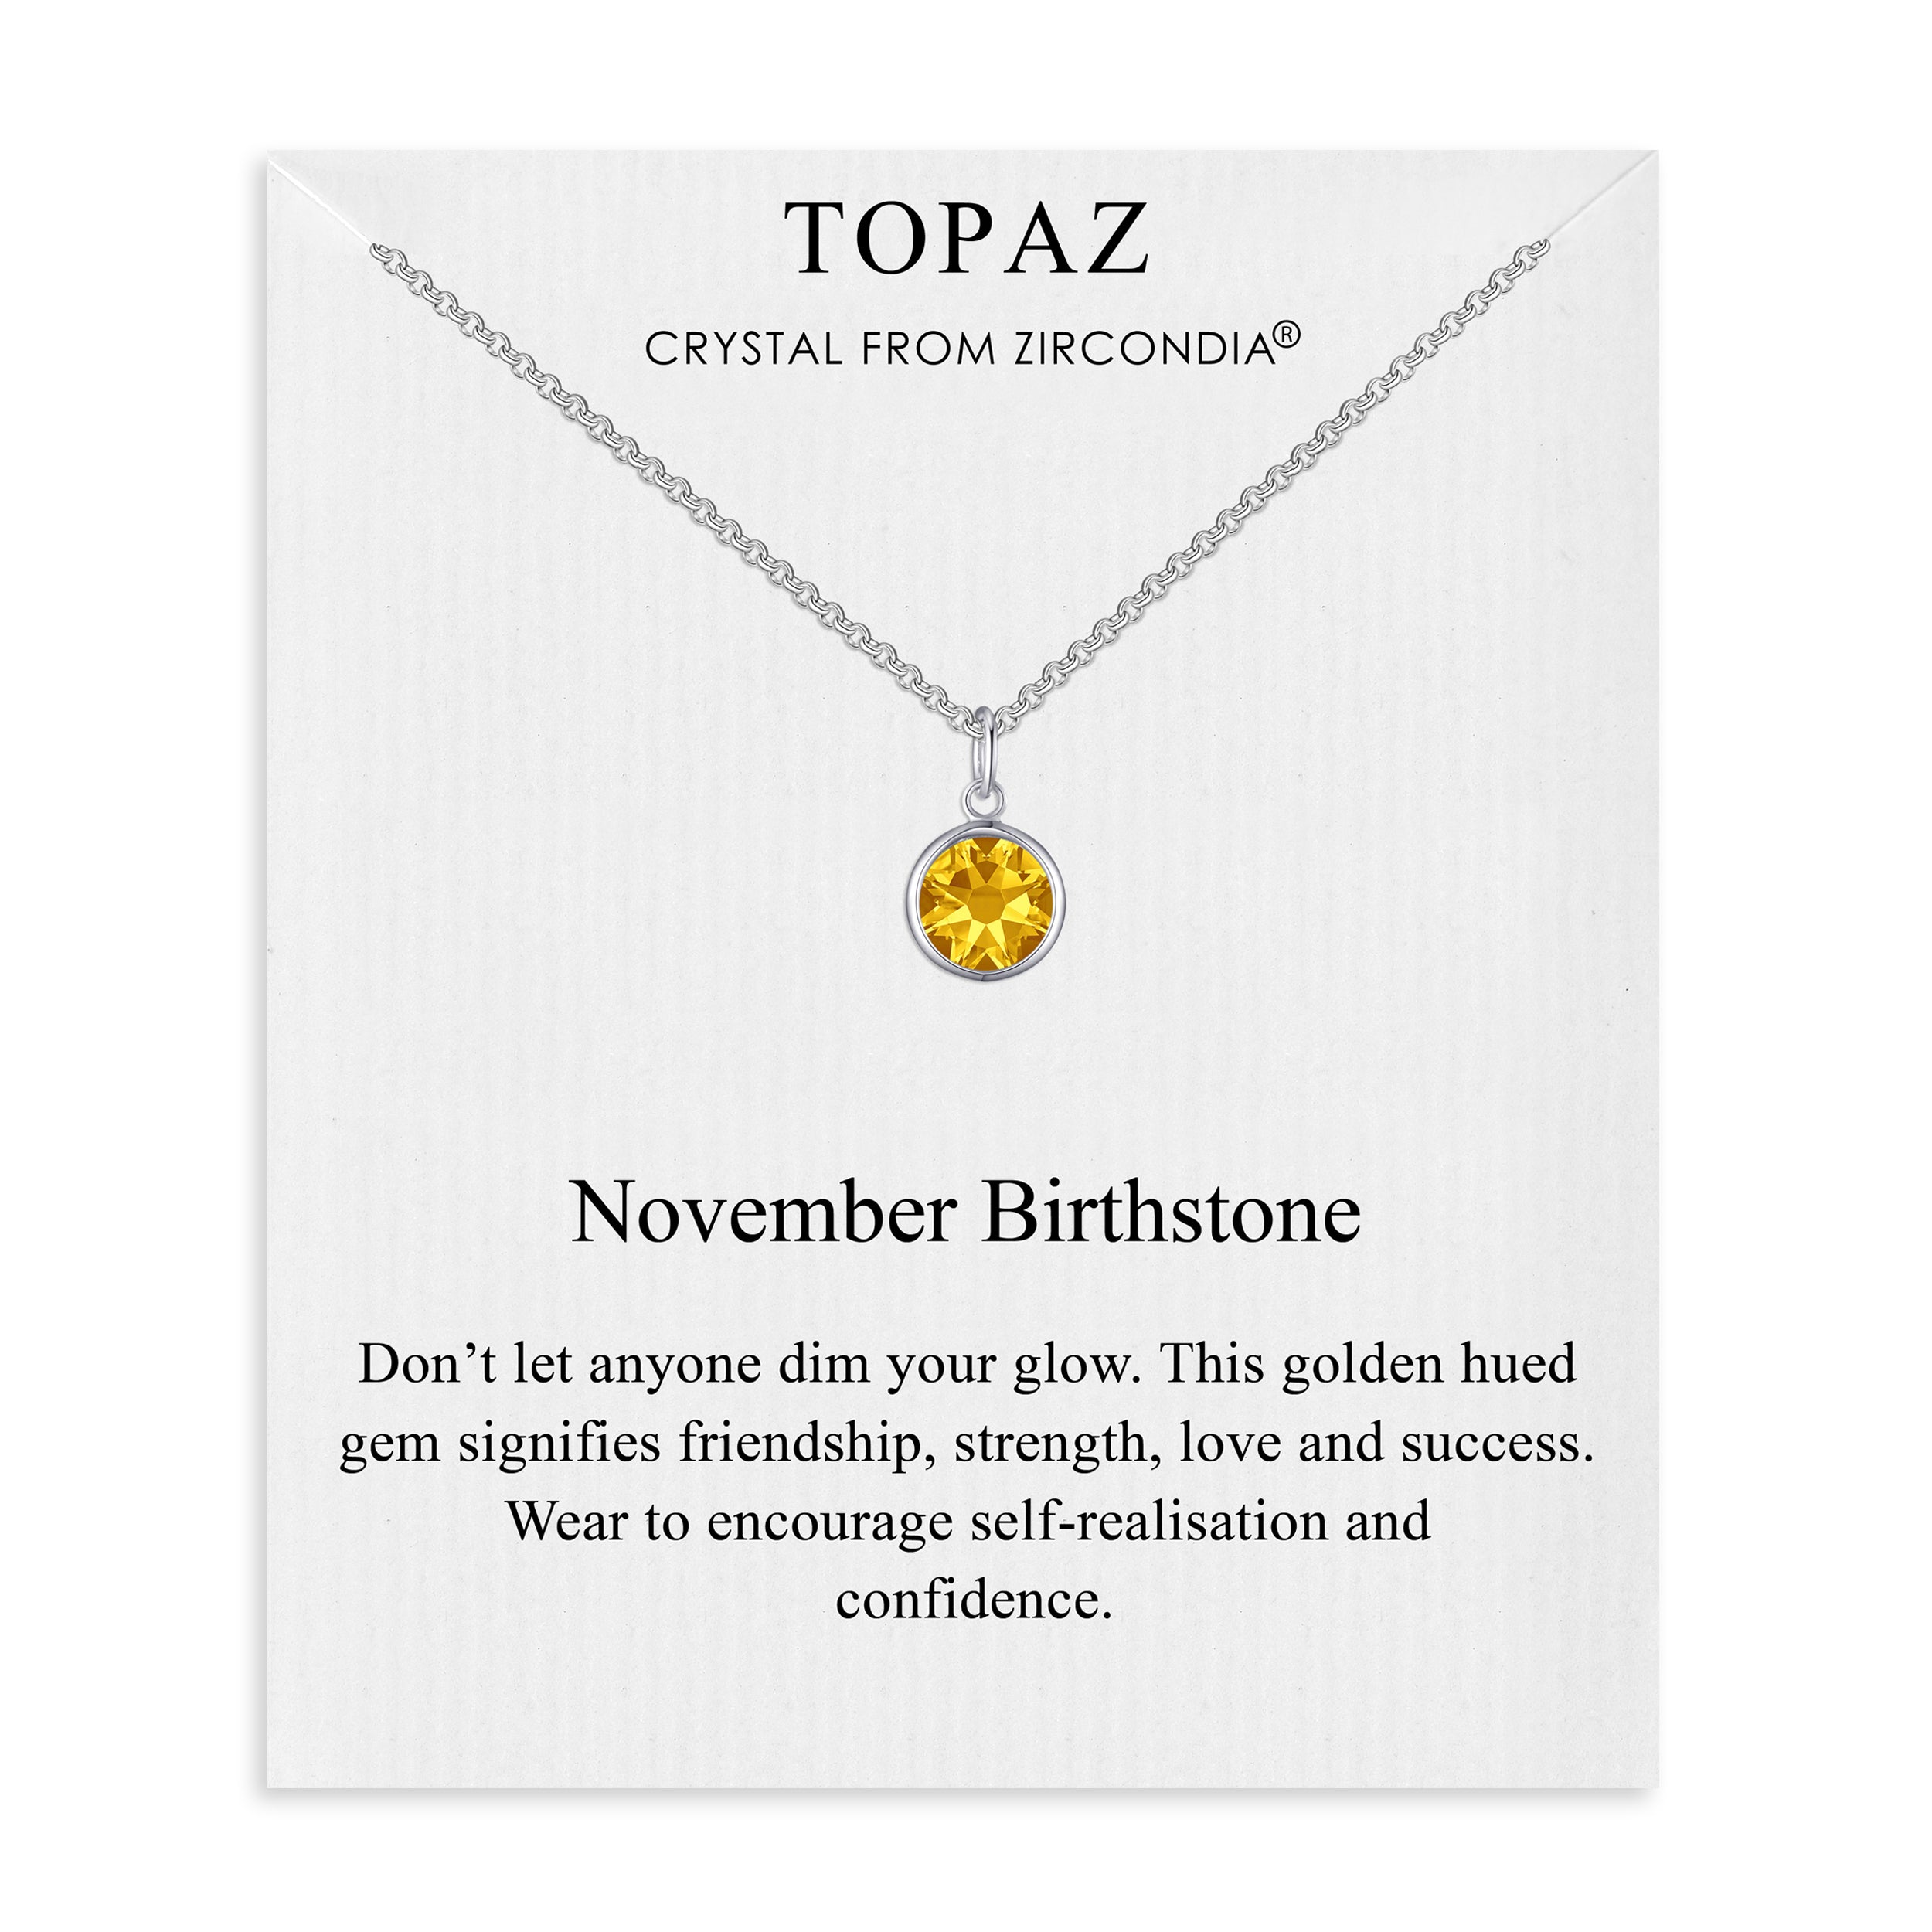 November (Topaz) Birthstone Necklace Created with Zircondia® Crystals by Philip Jones Jewellery